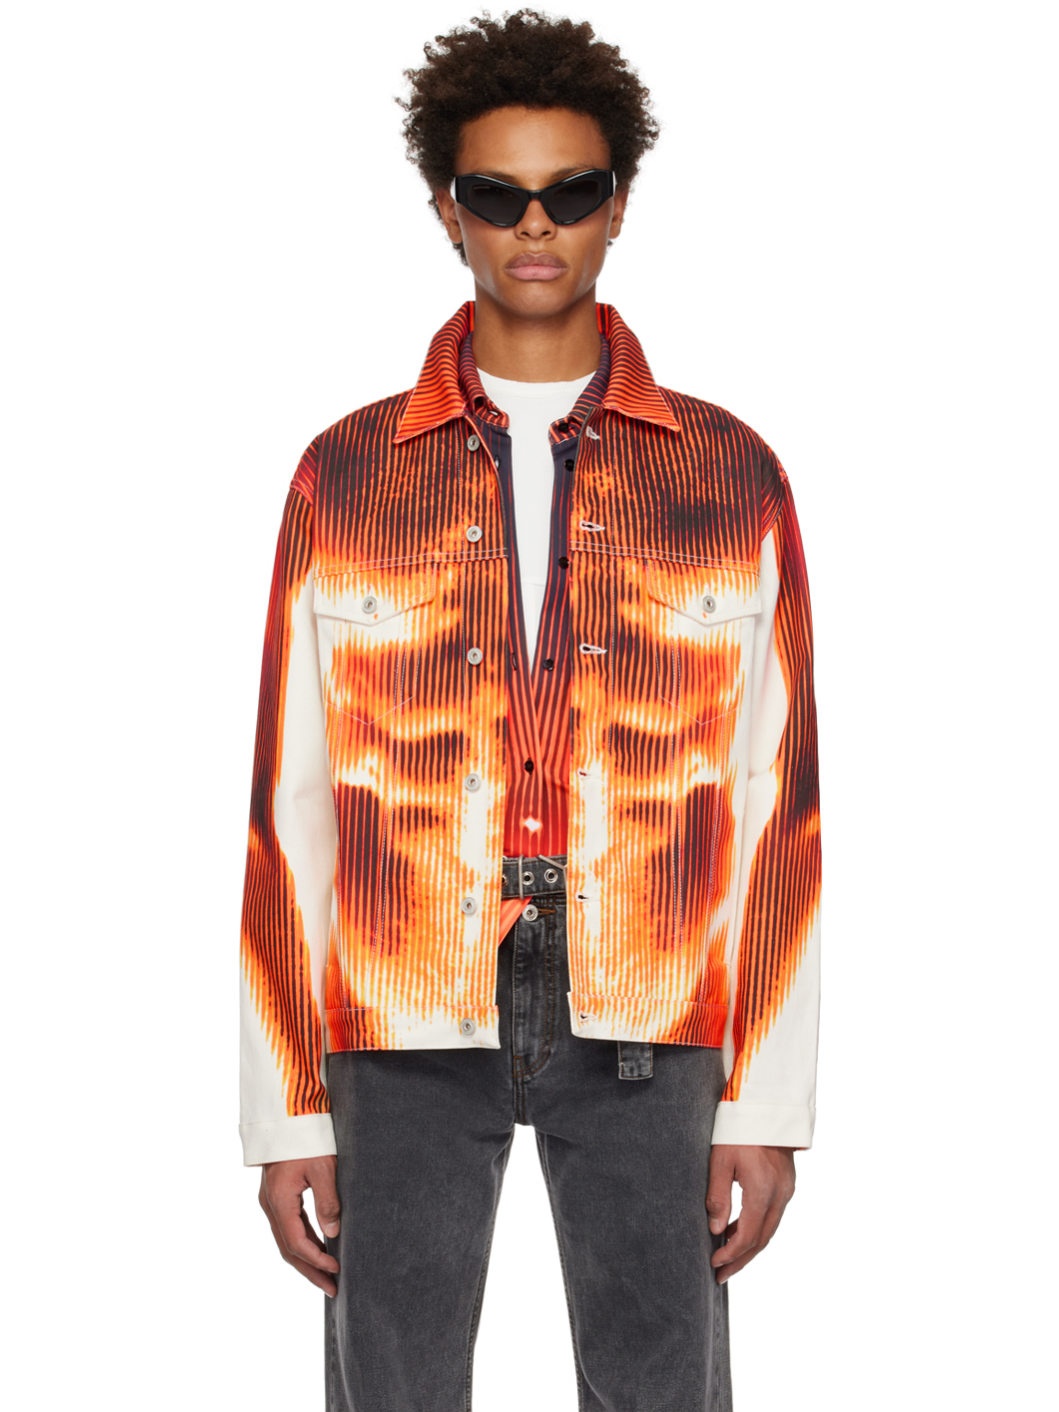 SSENSE Exclusive White & Orange Jean Paul Gaultier Edition Denim Jacket - 1